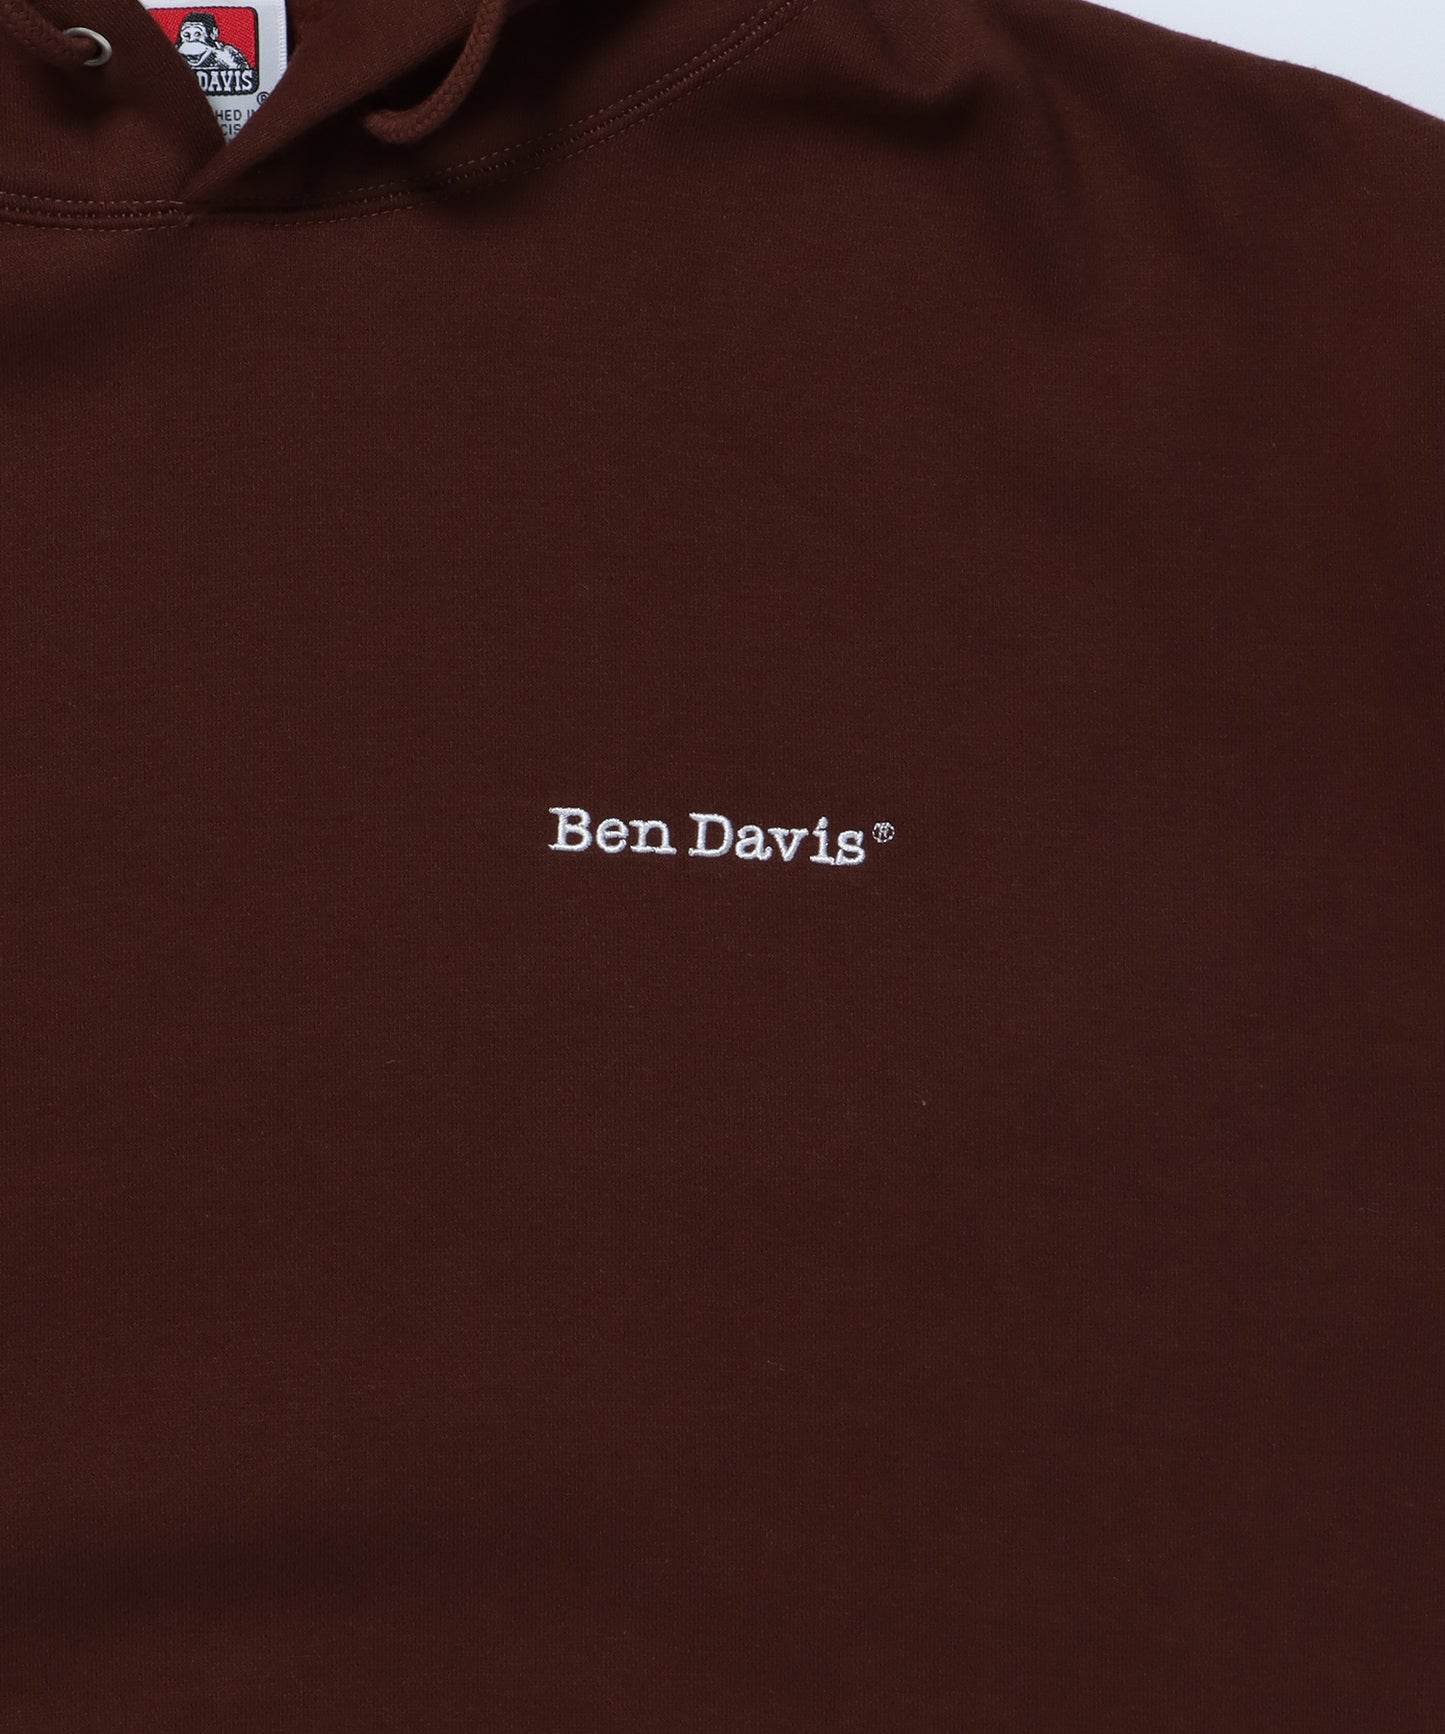 【BEN DAVIS(ベンデイビス)】 HEAVY SWEAT HOODIE NVL / ビッグ スウェット ヘビーウェイト 限定 パーカー ブラウン